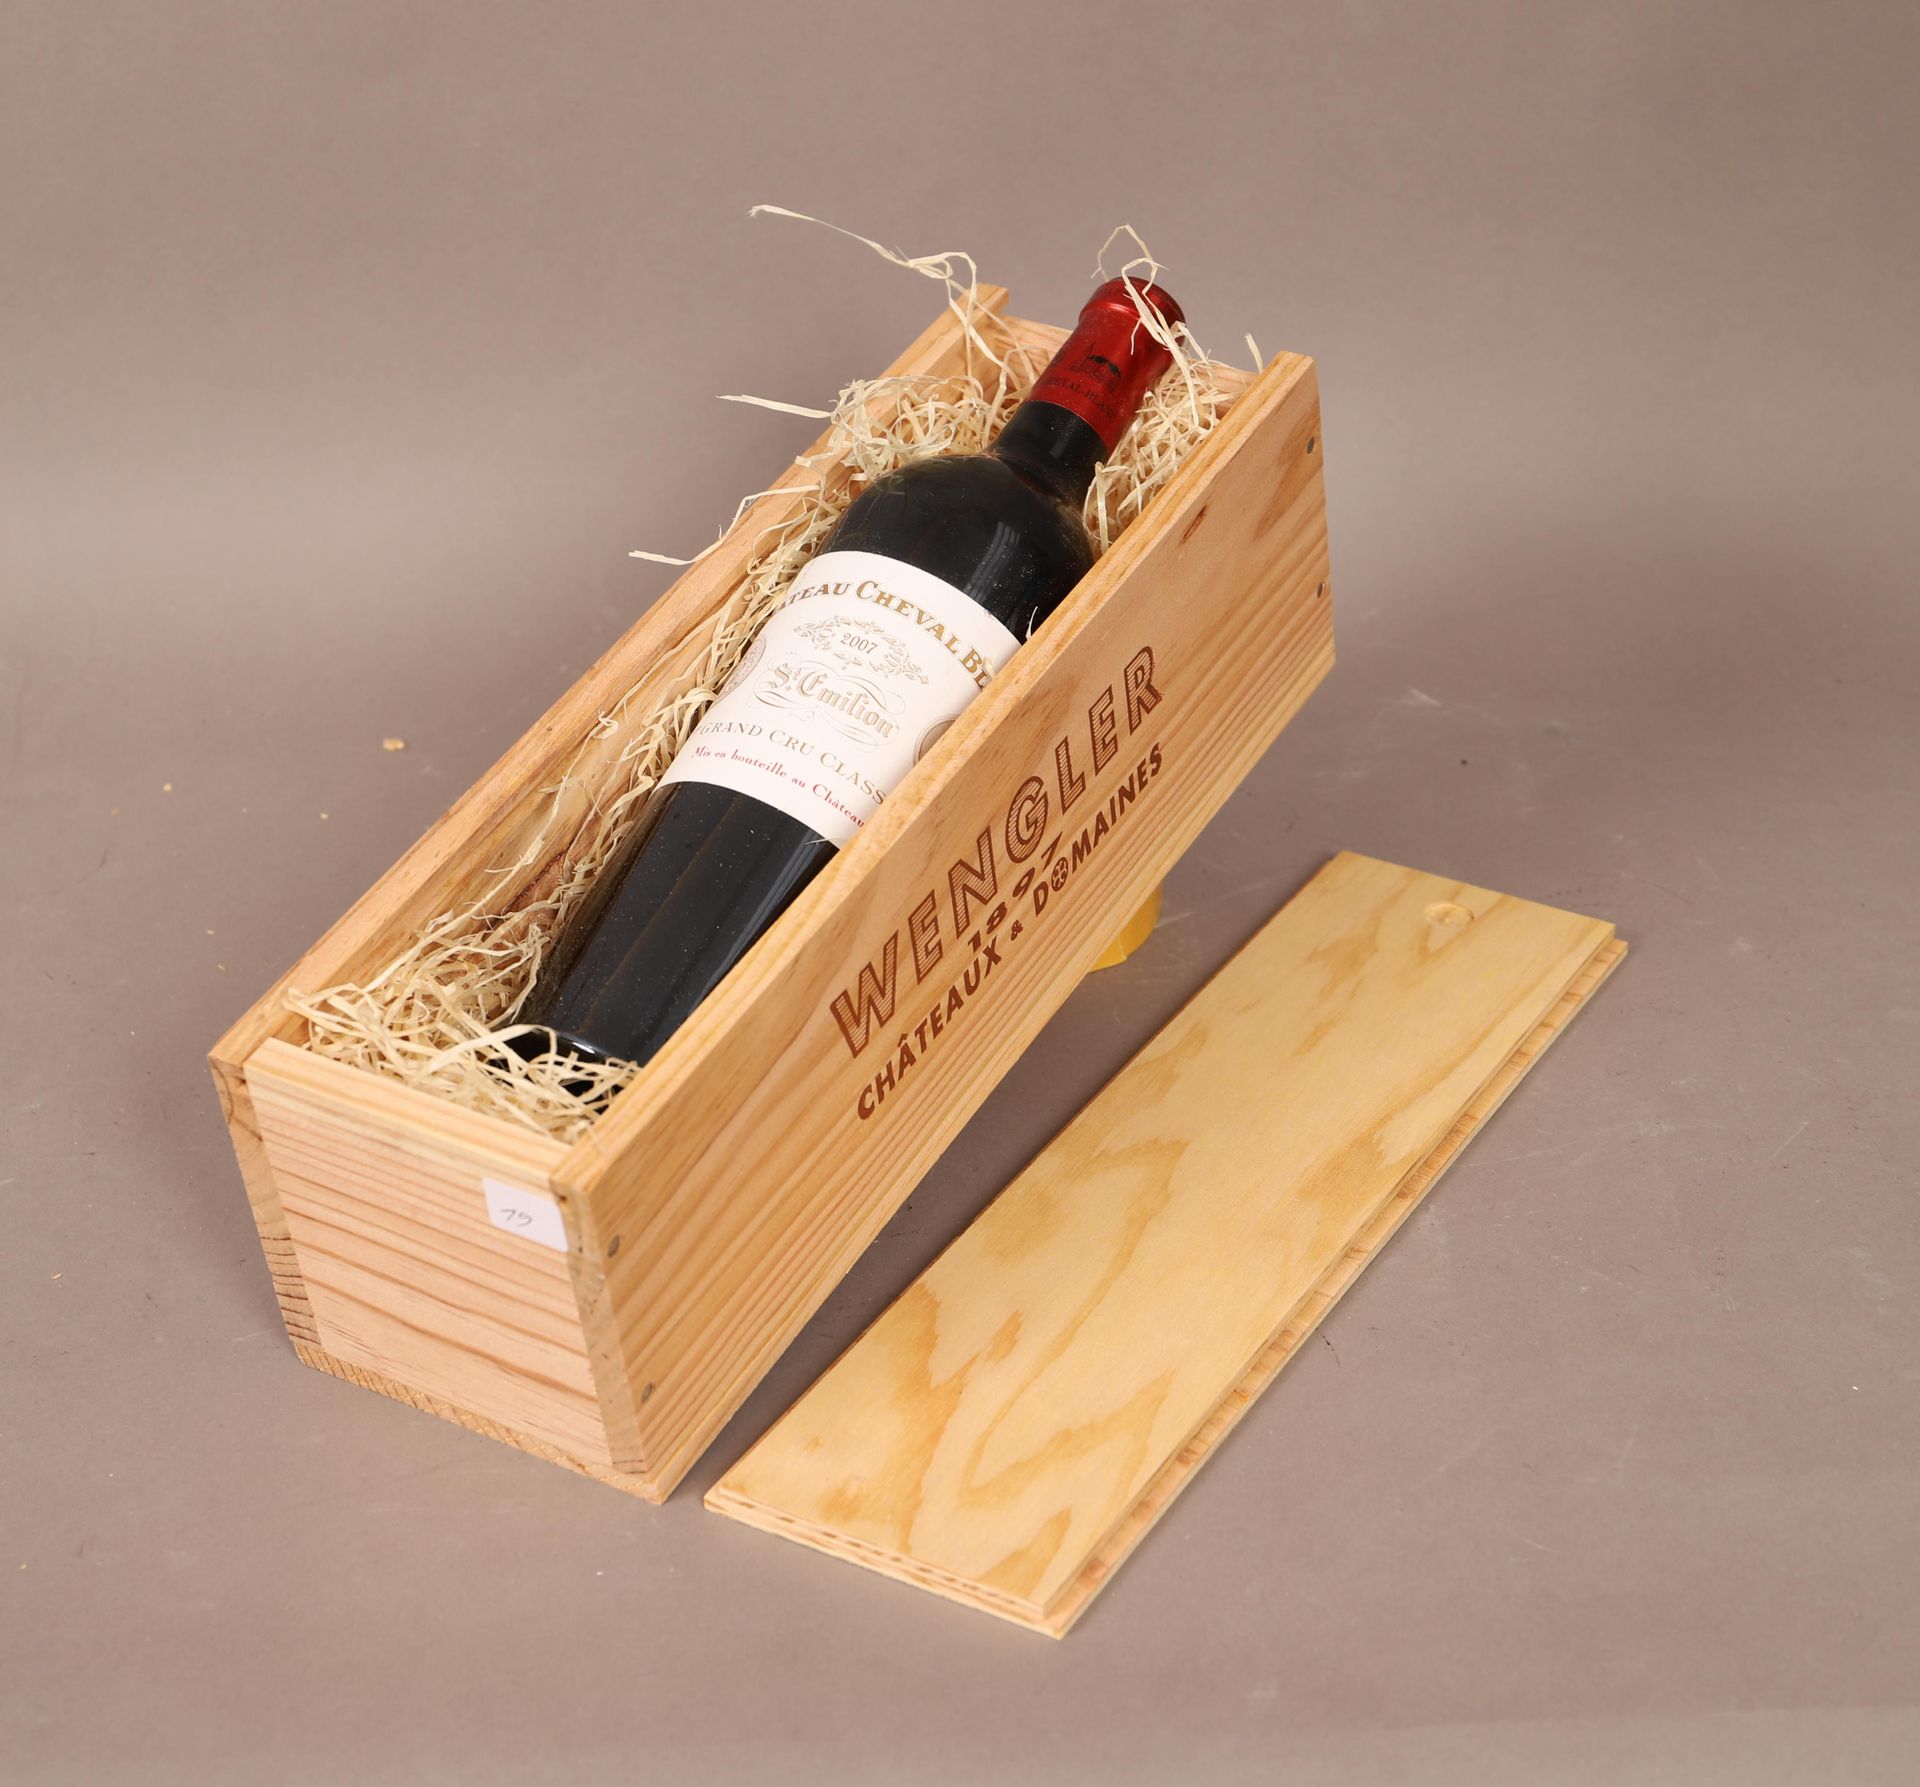 Null 白马酒庄 (x1)

第1届GCC

圣埃米利永

2007

木盒 - Wengler礼品盒

0,75L